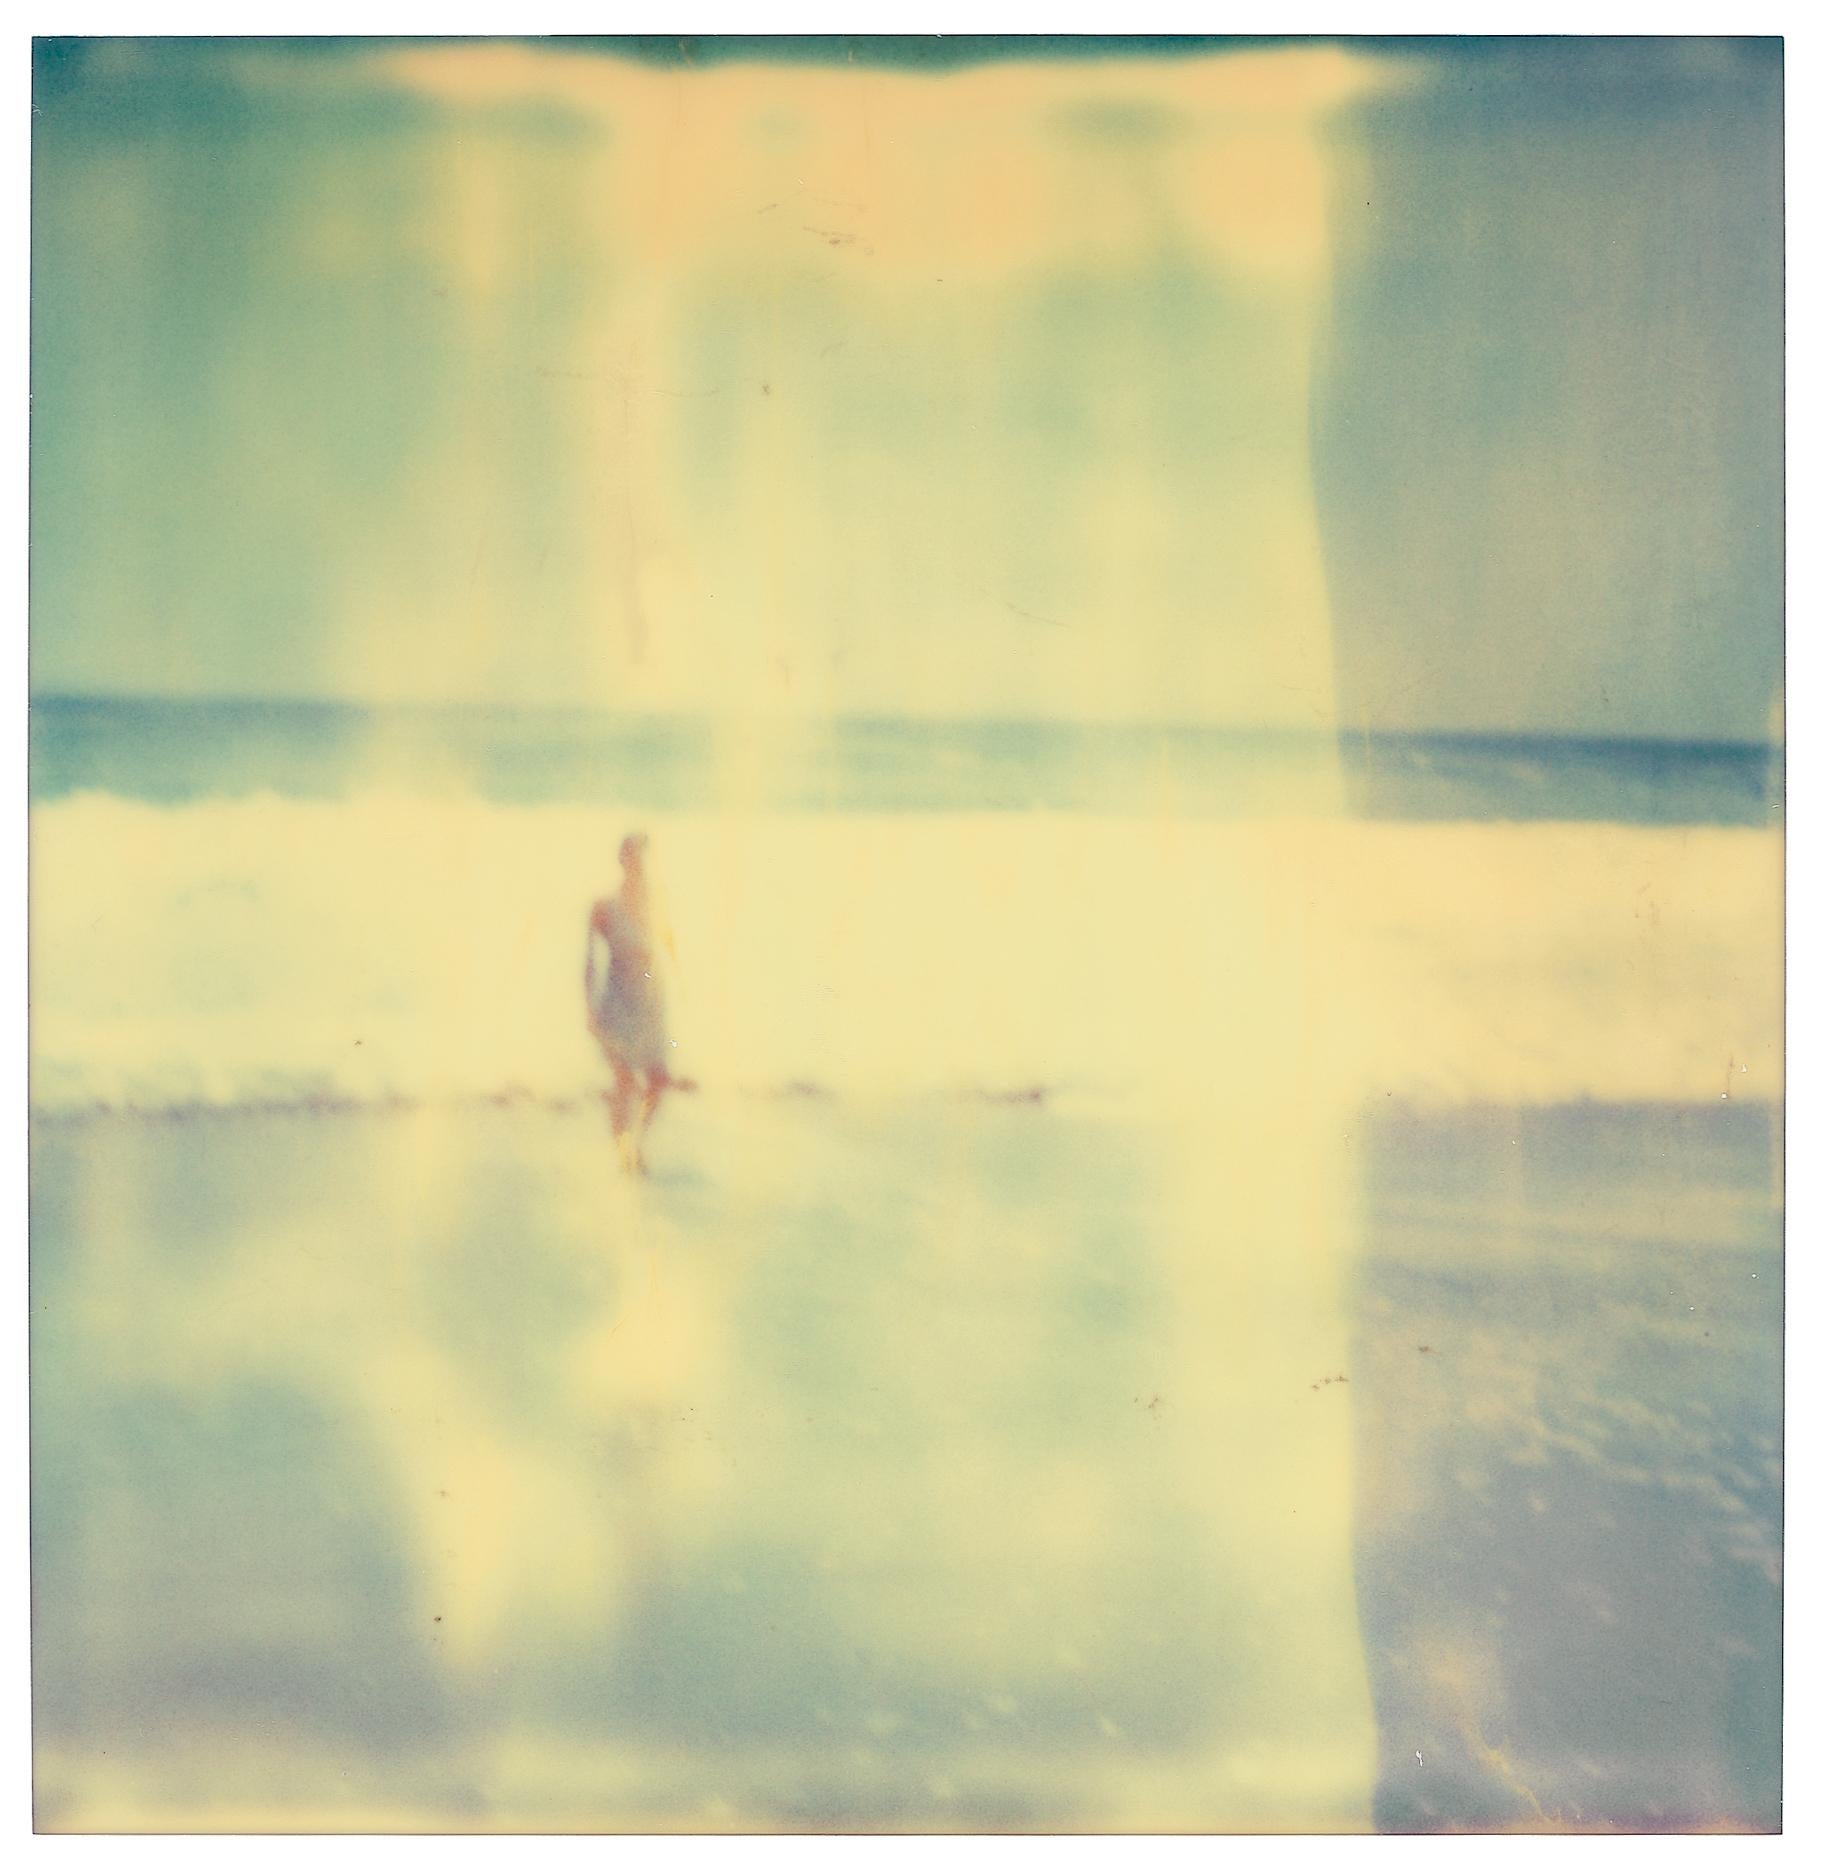 Woman in Malibu (Stranger than Paradise) - Polaroid, analog, 21st Century, Woman - Contemporary Photograph by Stefanie Schneider